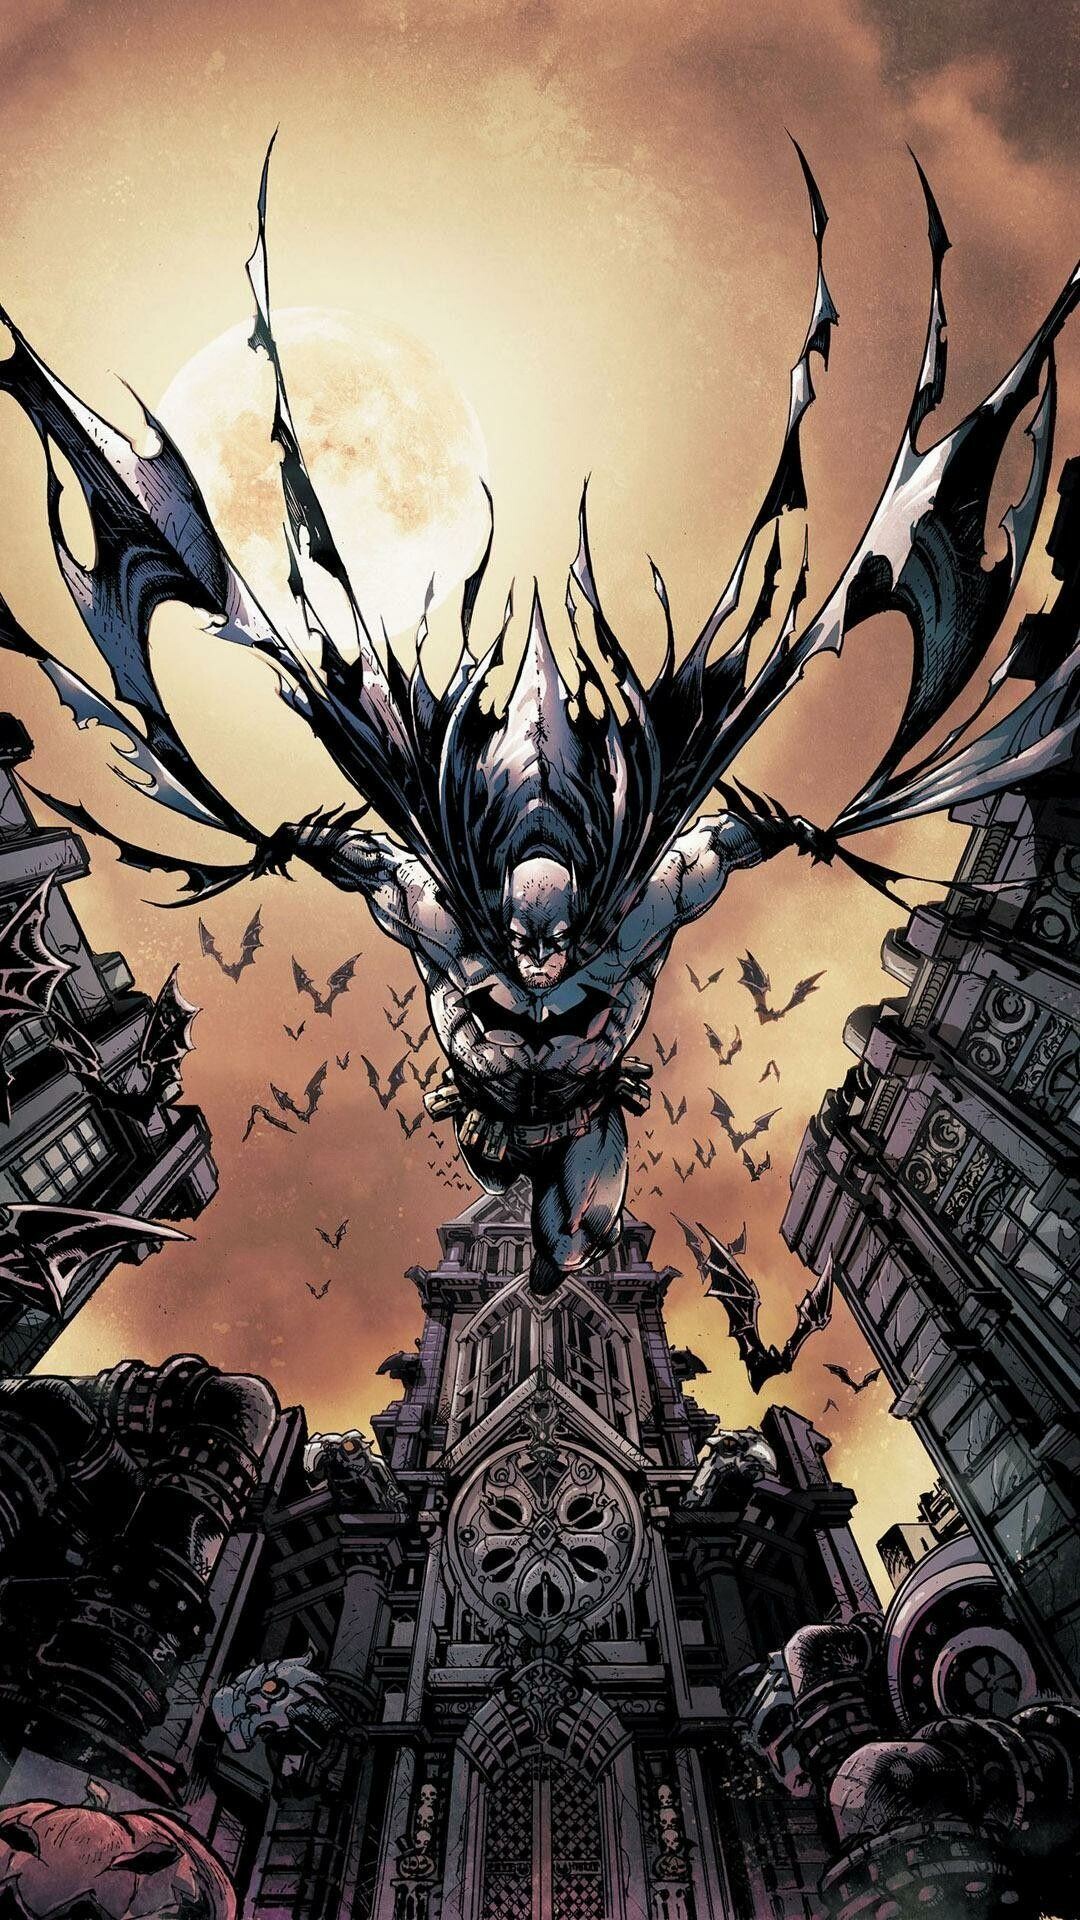 DC Heroes: Batman, a tortured, brooding vigilante dressed as a bat who fights against evil. 1080x1920 Full HD Wallpaper.